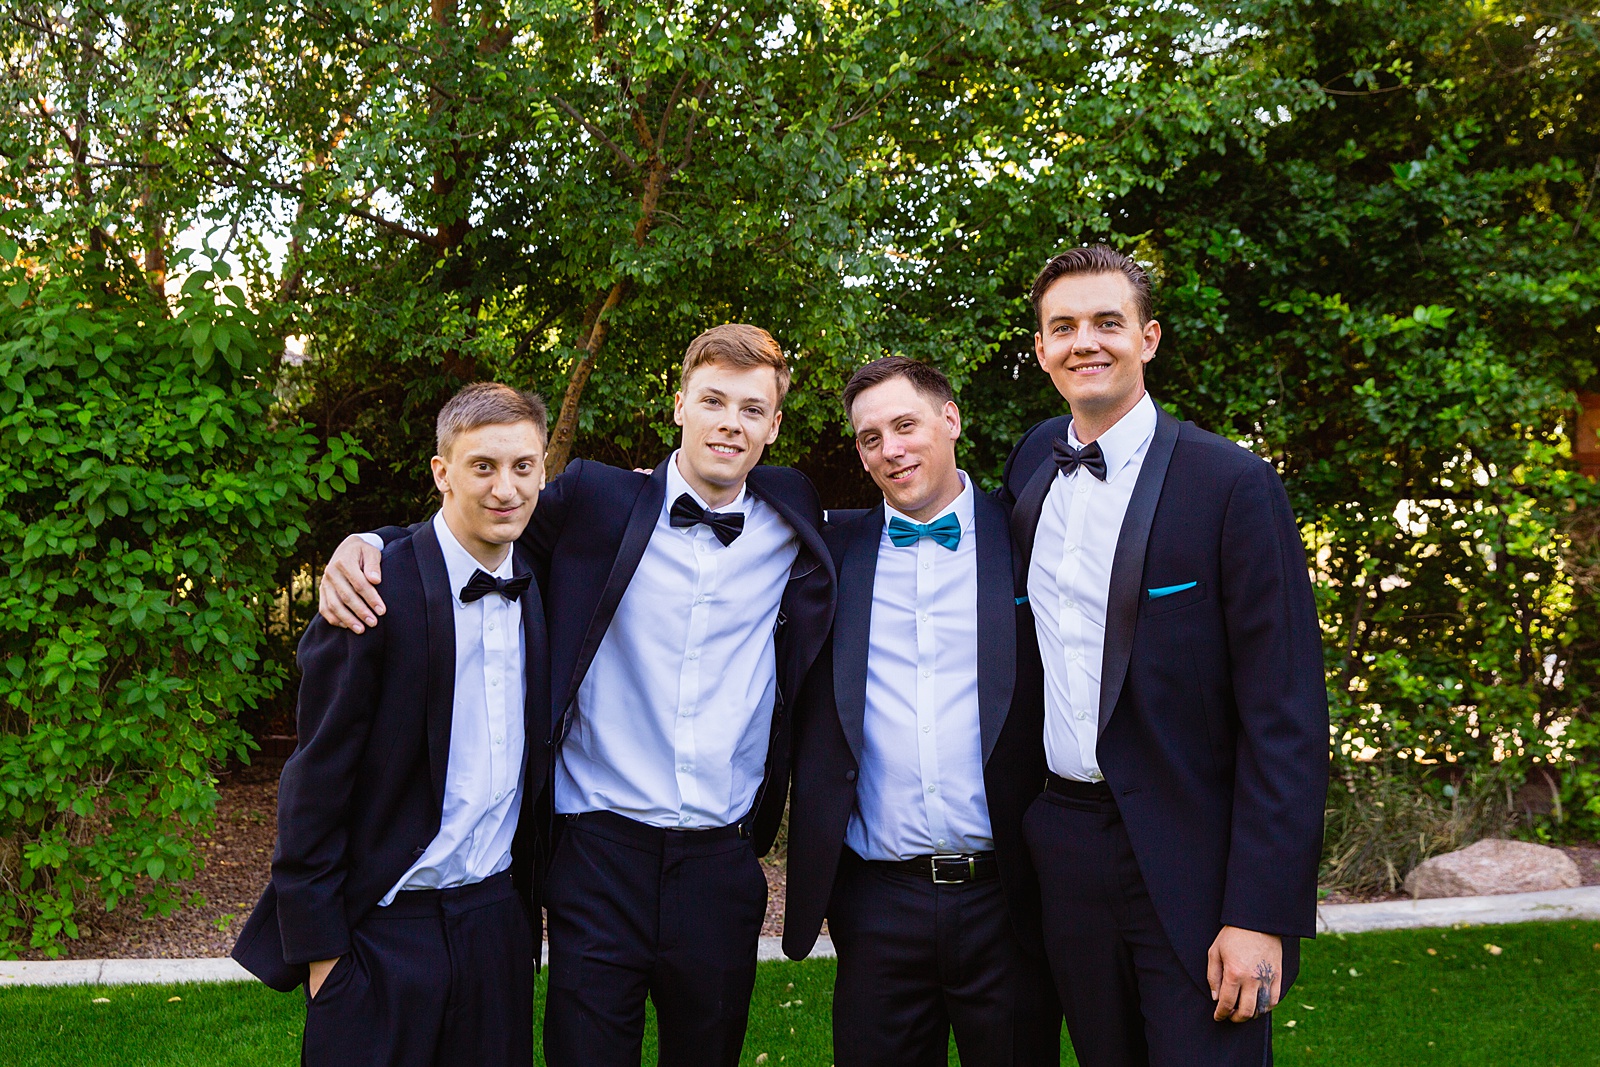 Groom and groomsmen together at a Stonebridge Manor wedding by Arizona wedding photographer PMA Photography.